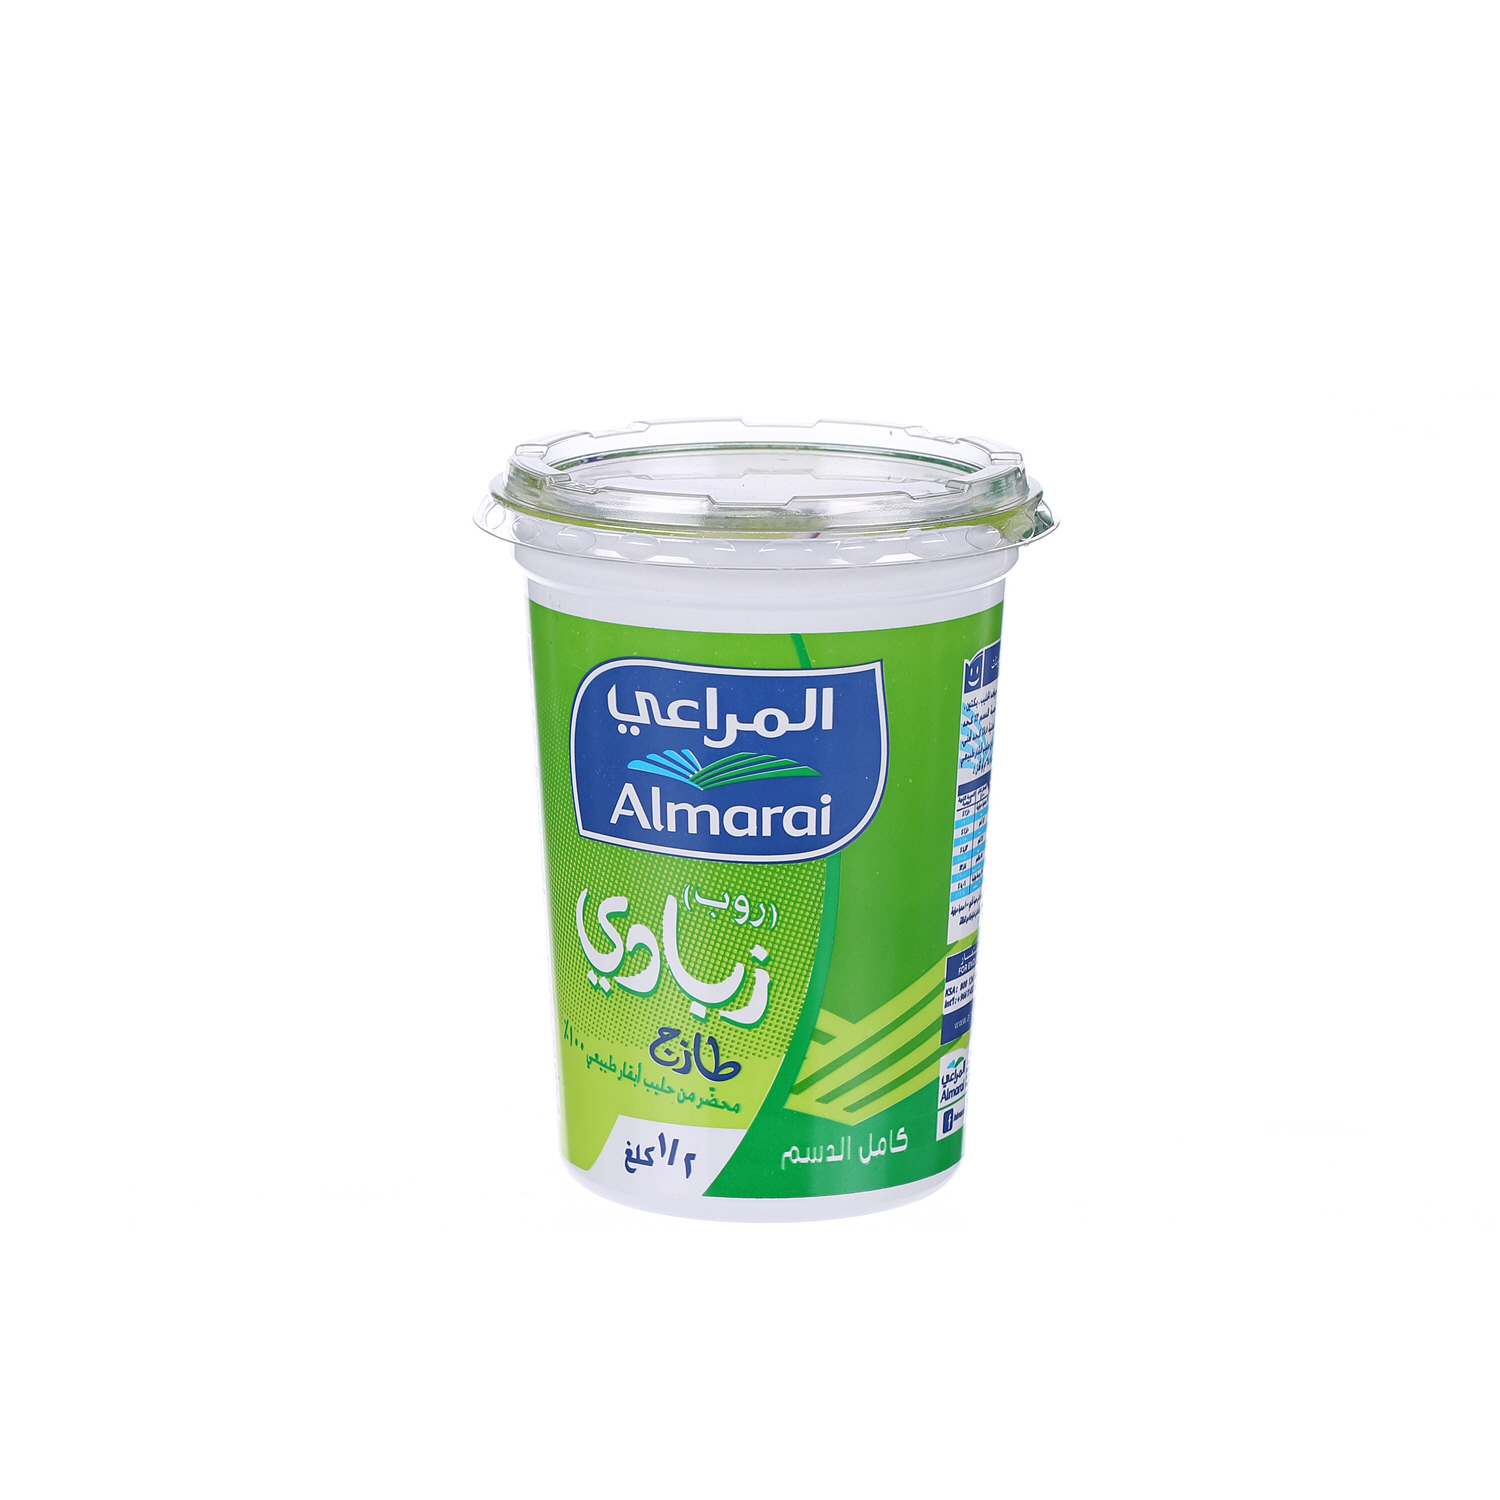 Al Marai Fresh Yoghurt Full Fat 500 g